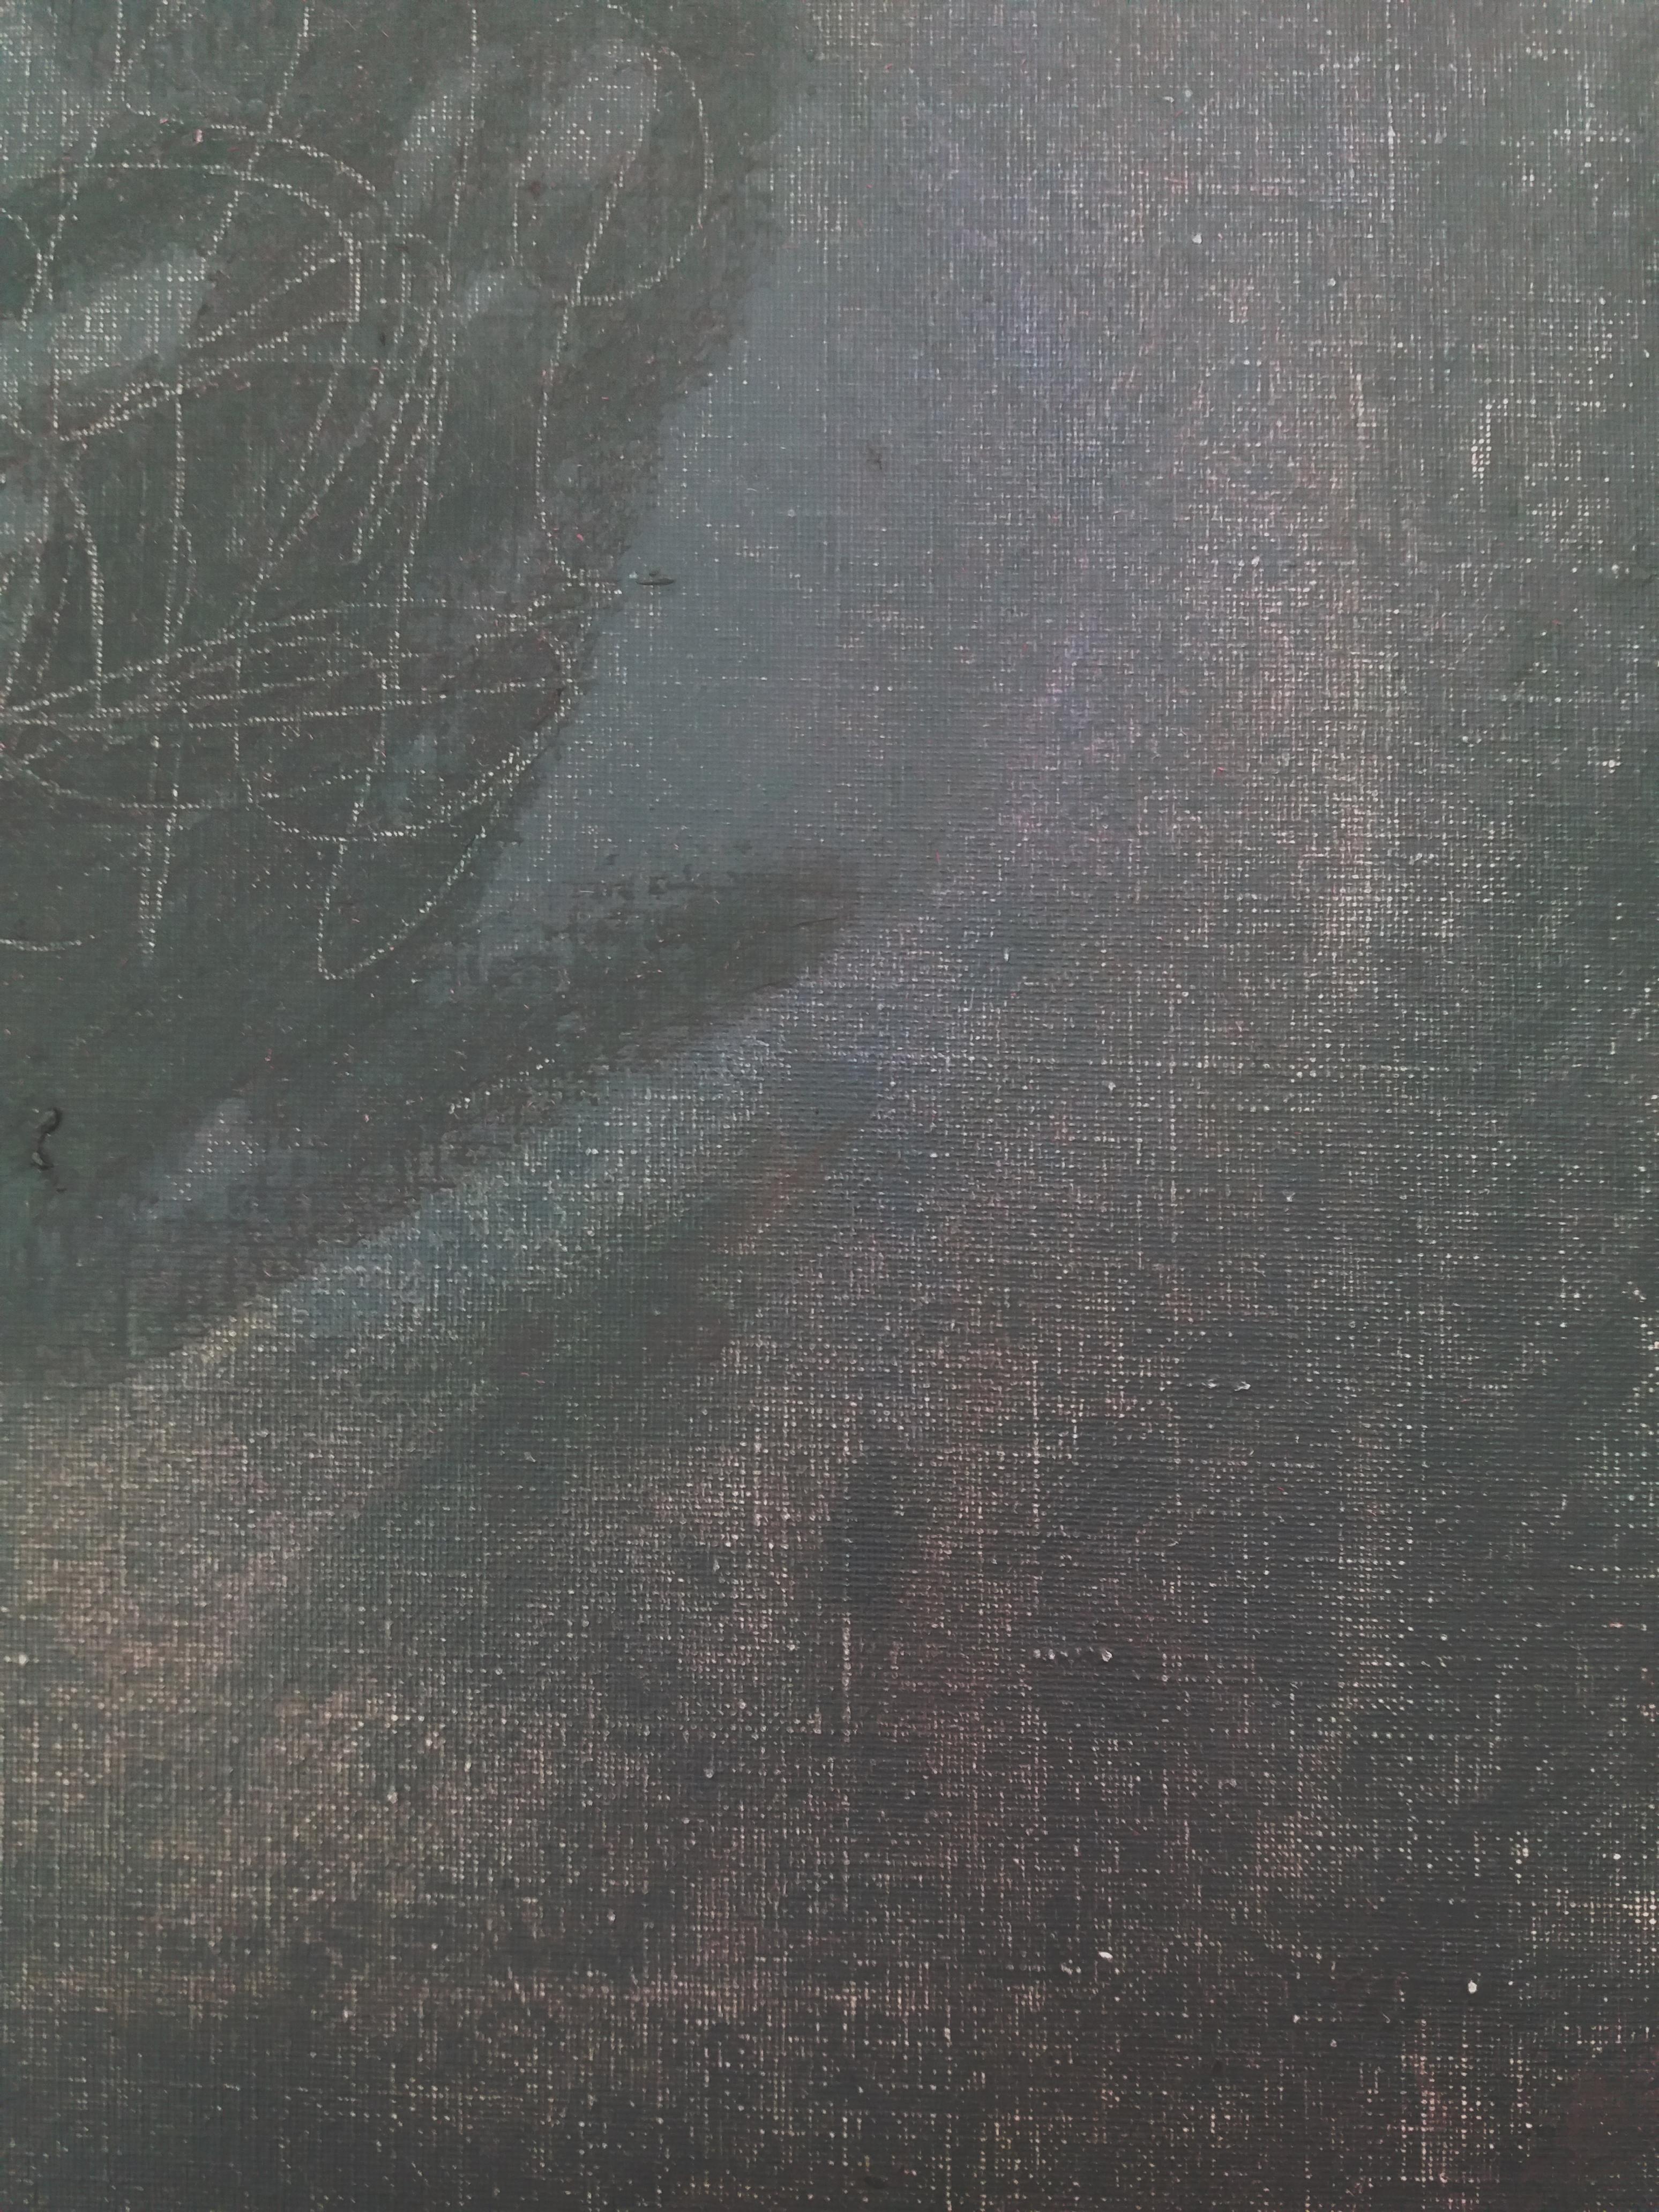 Argimon  13 Black, Vertical,  original abstract canvas acrylic painting 3